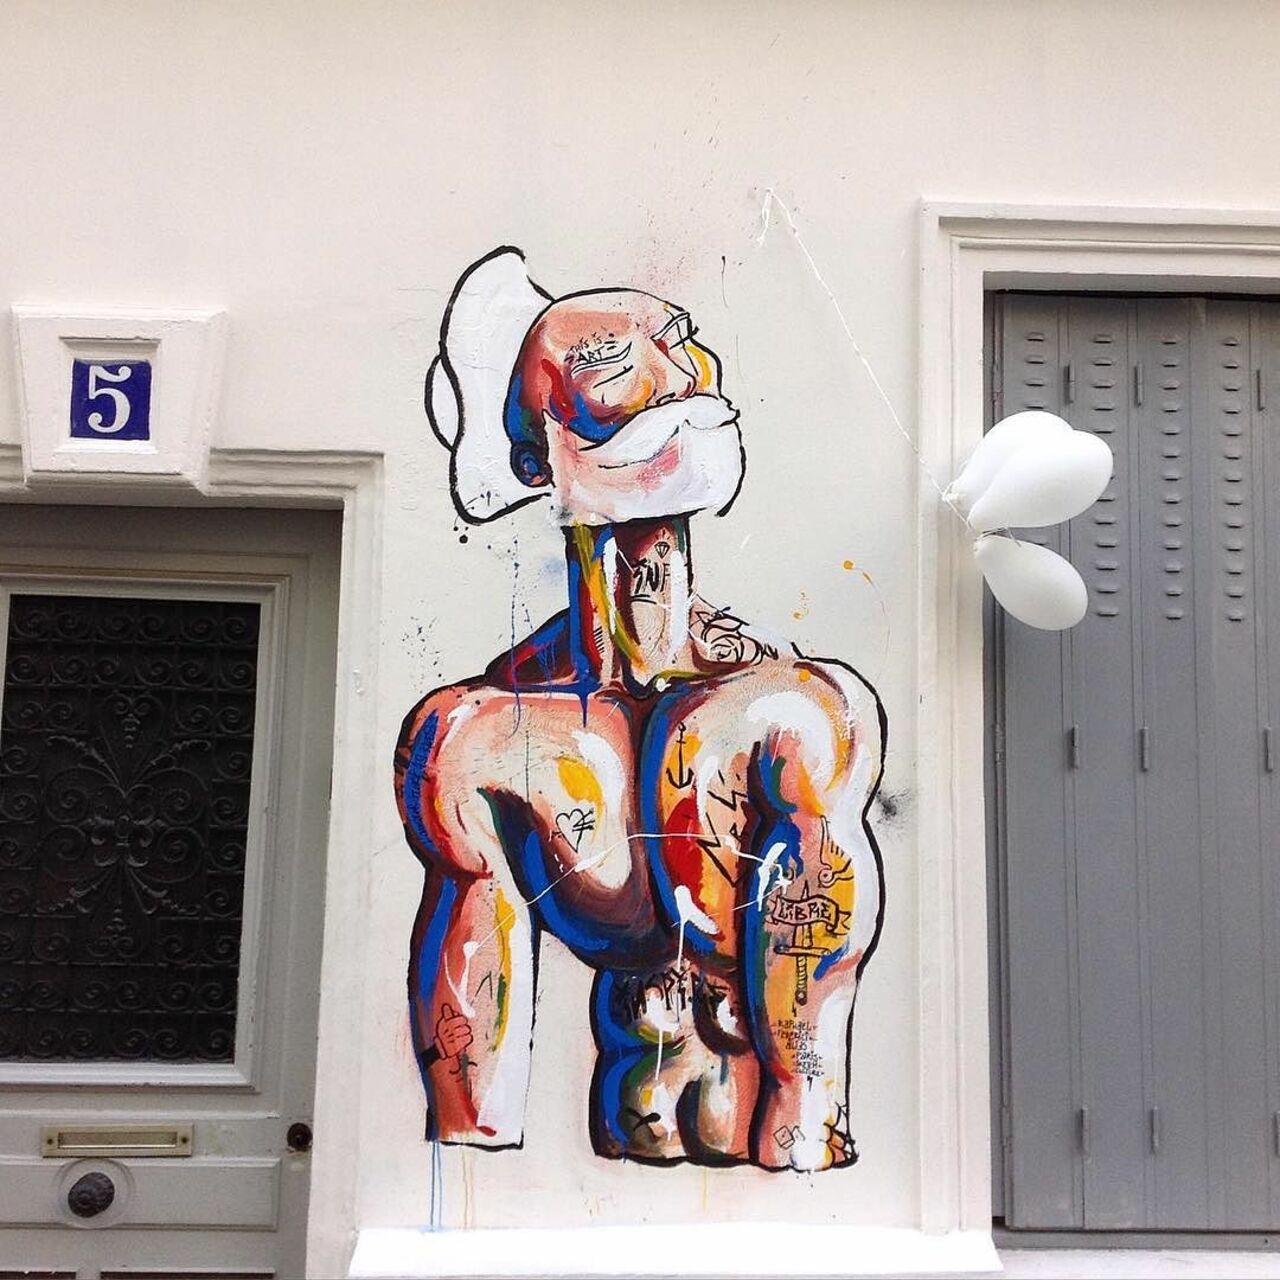 #Paris #graffiti photo by @vgsman http://ift.tt/1MHTJ1b #StreetArt https://t.co/MjWTkpF2ku